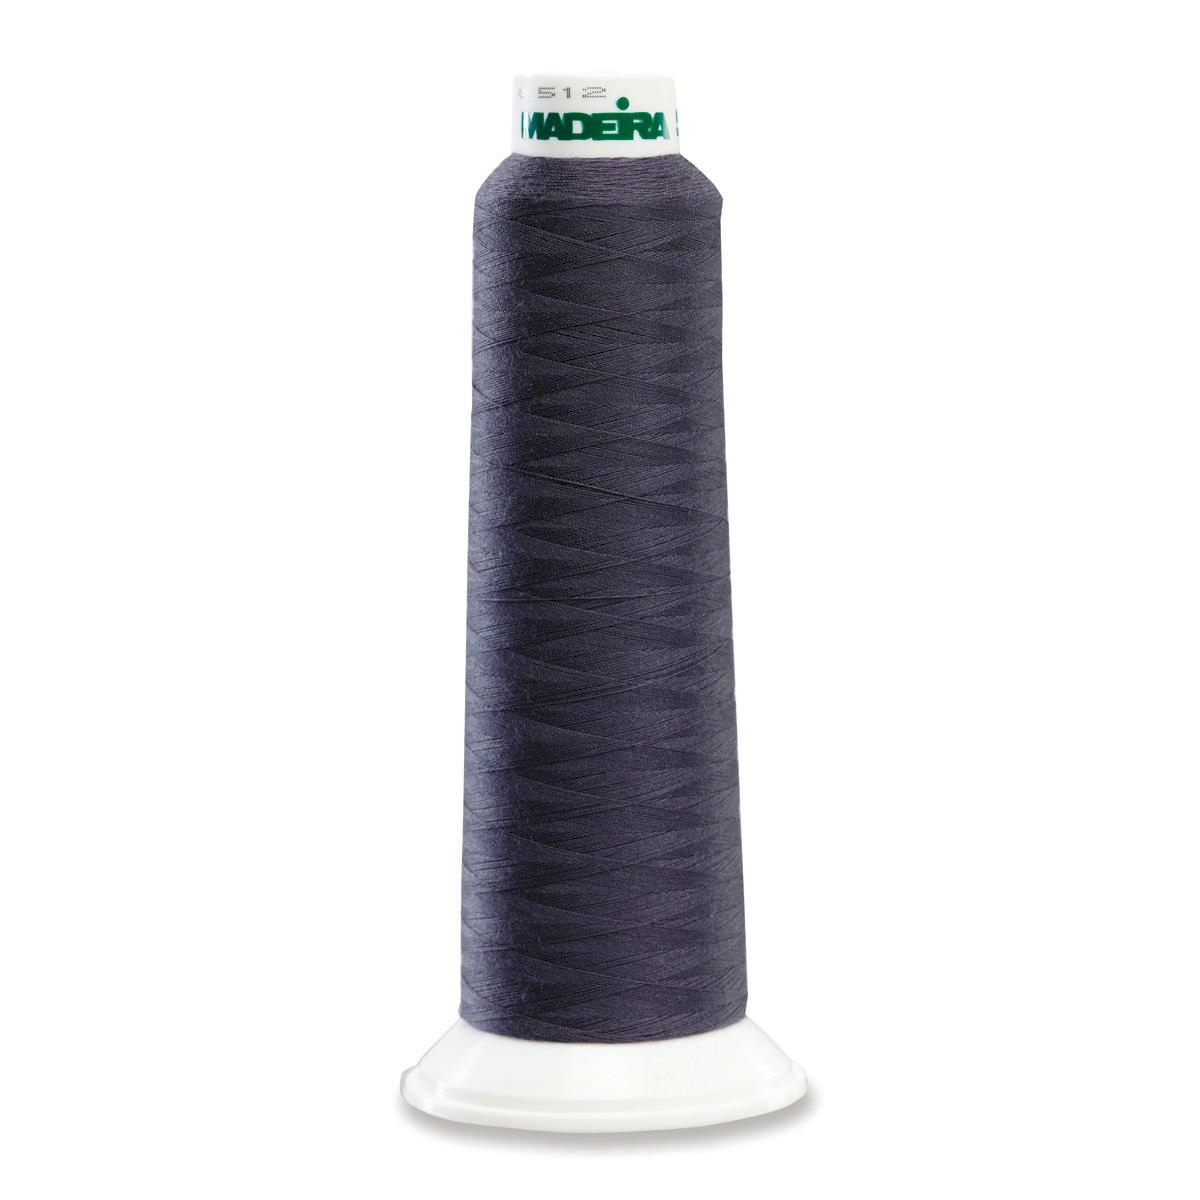 Madeira Aerolock Premium Serger Thread 2000 Yard Cone - GRAPHITE